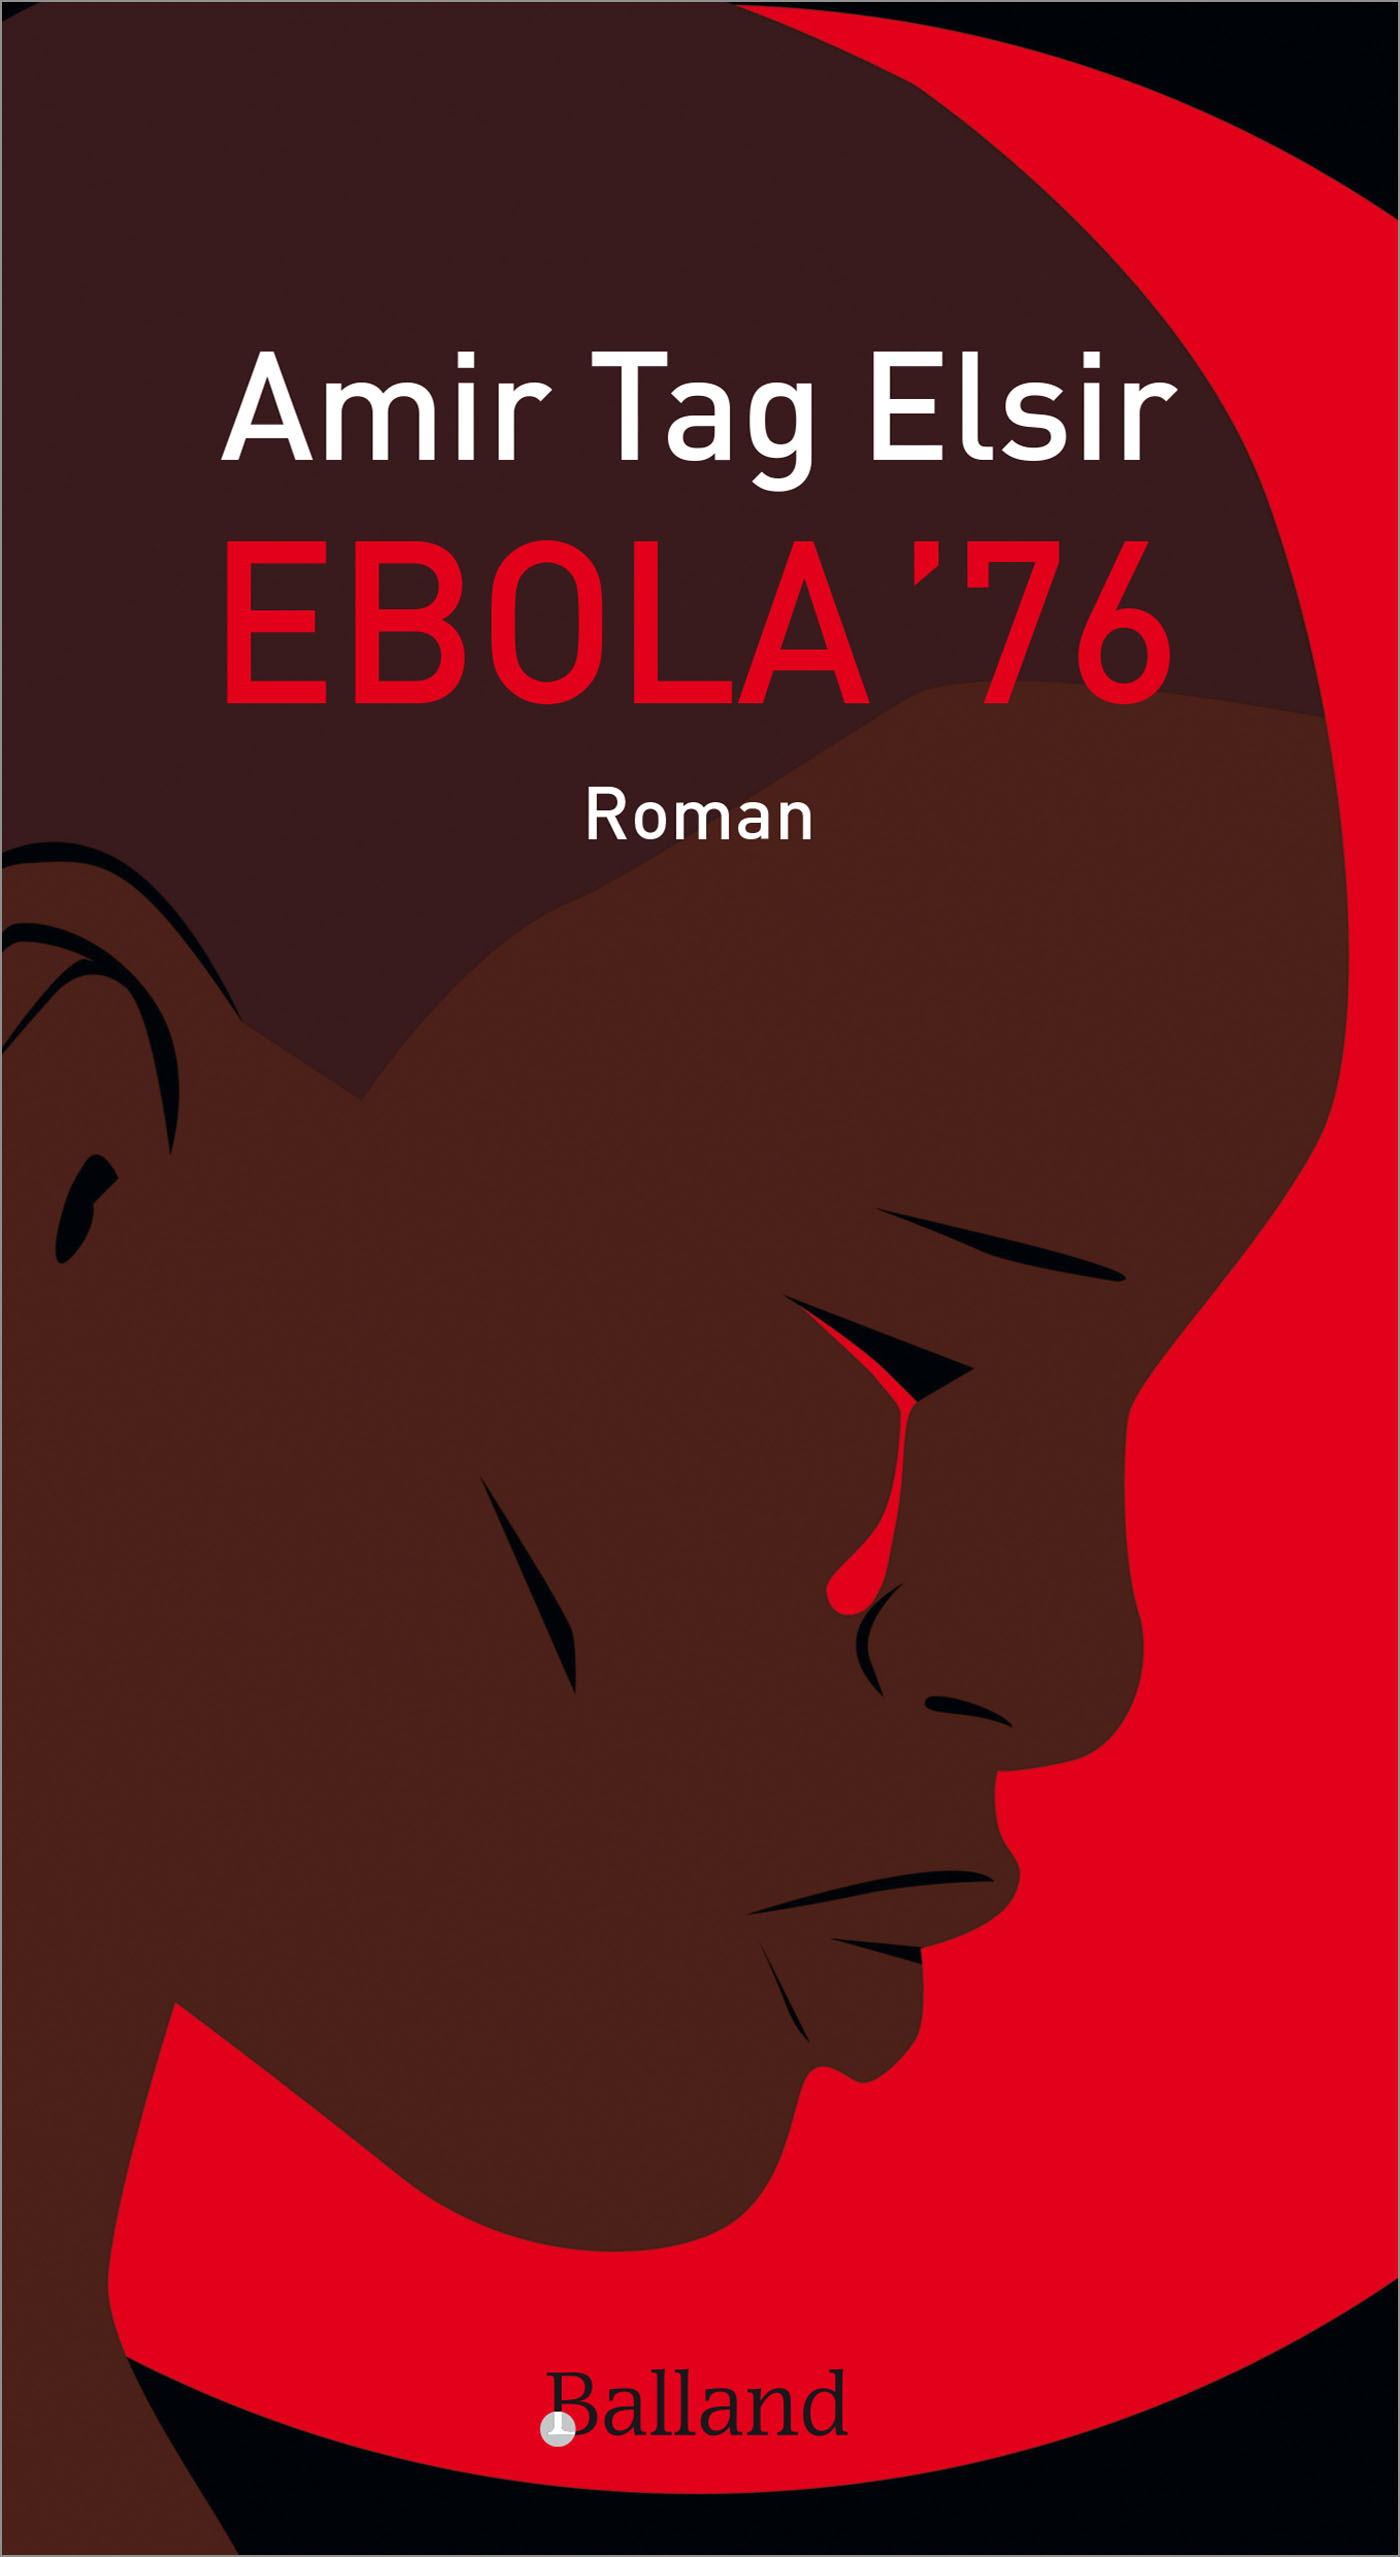 Ebola '76